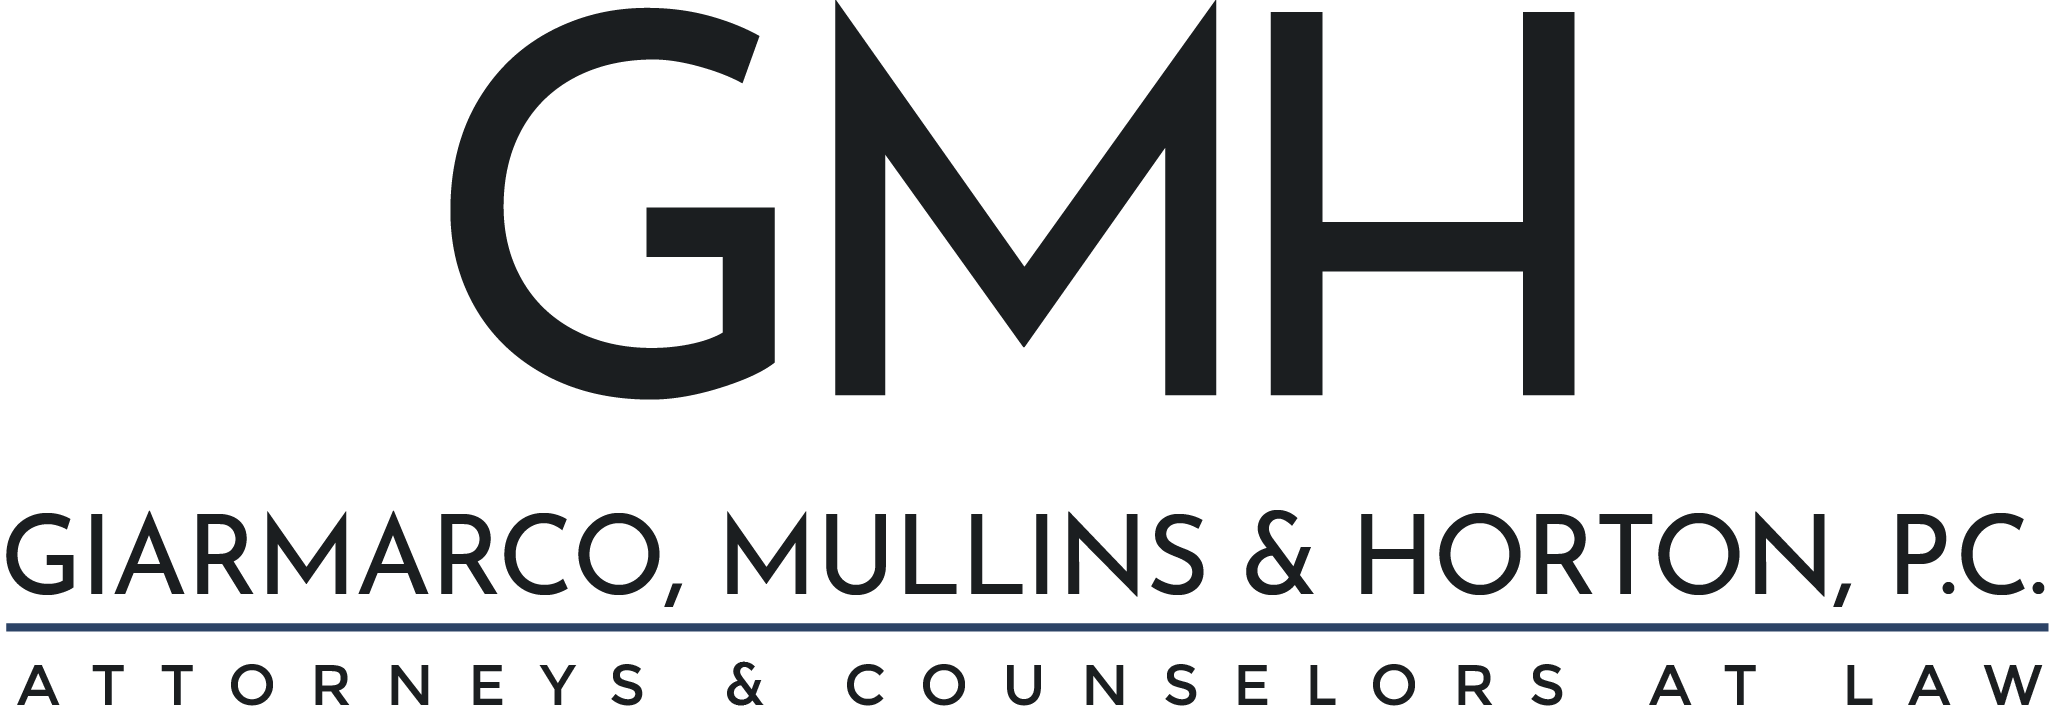 Giarmarco, Mullins & Horton, P.C. Company Logo